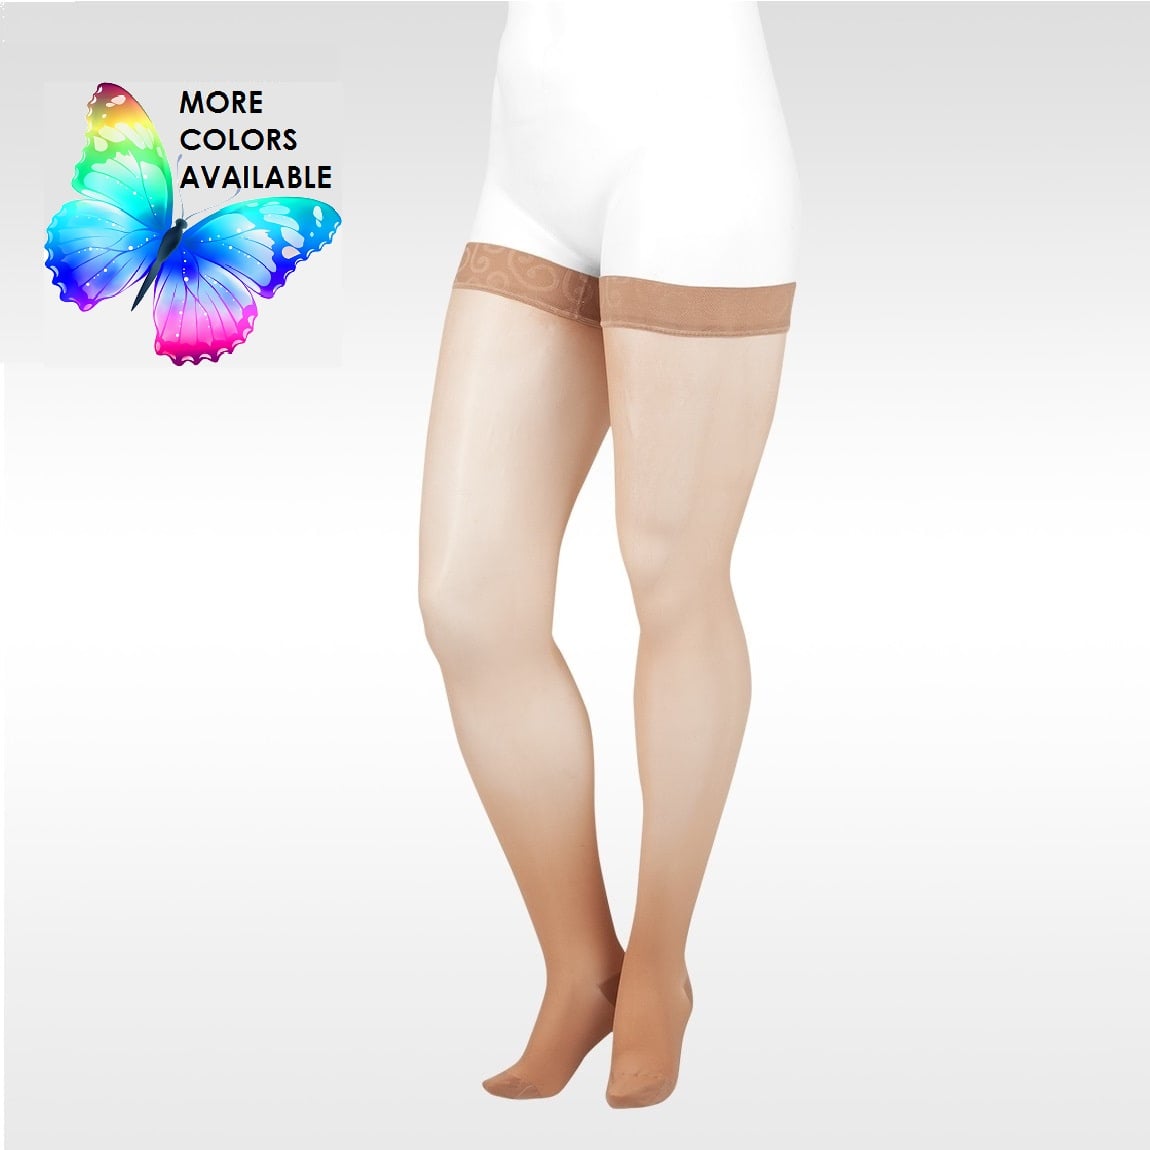 Juzo Soft Thigh High Compression Stockings 20-30/30-40 mmHg